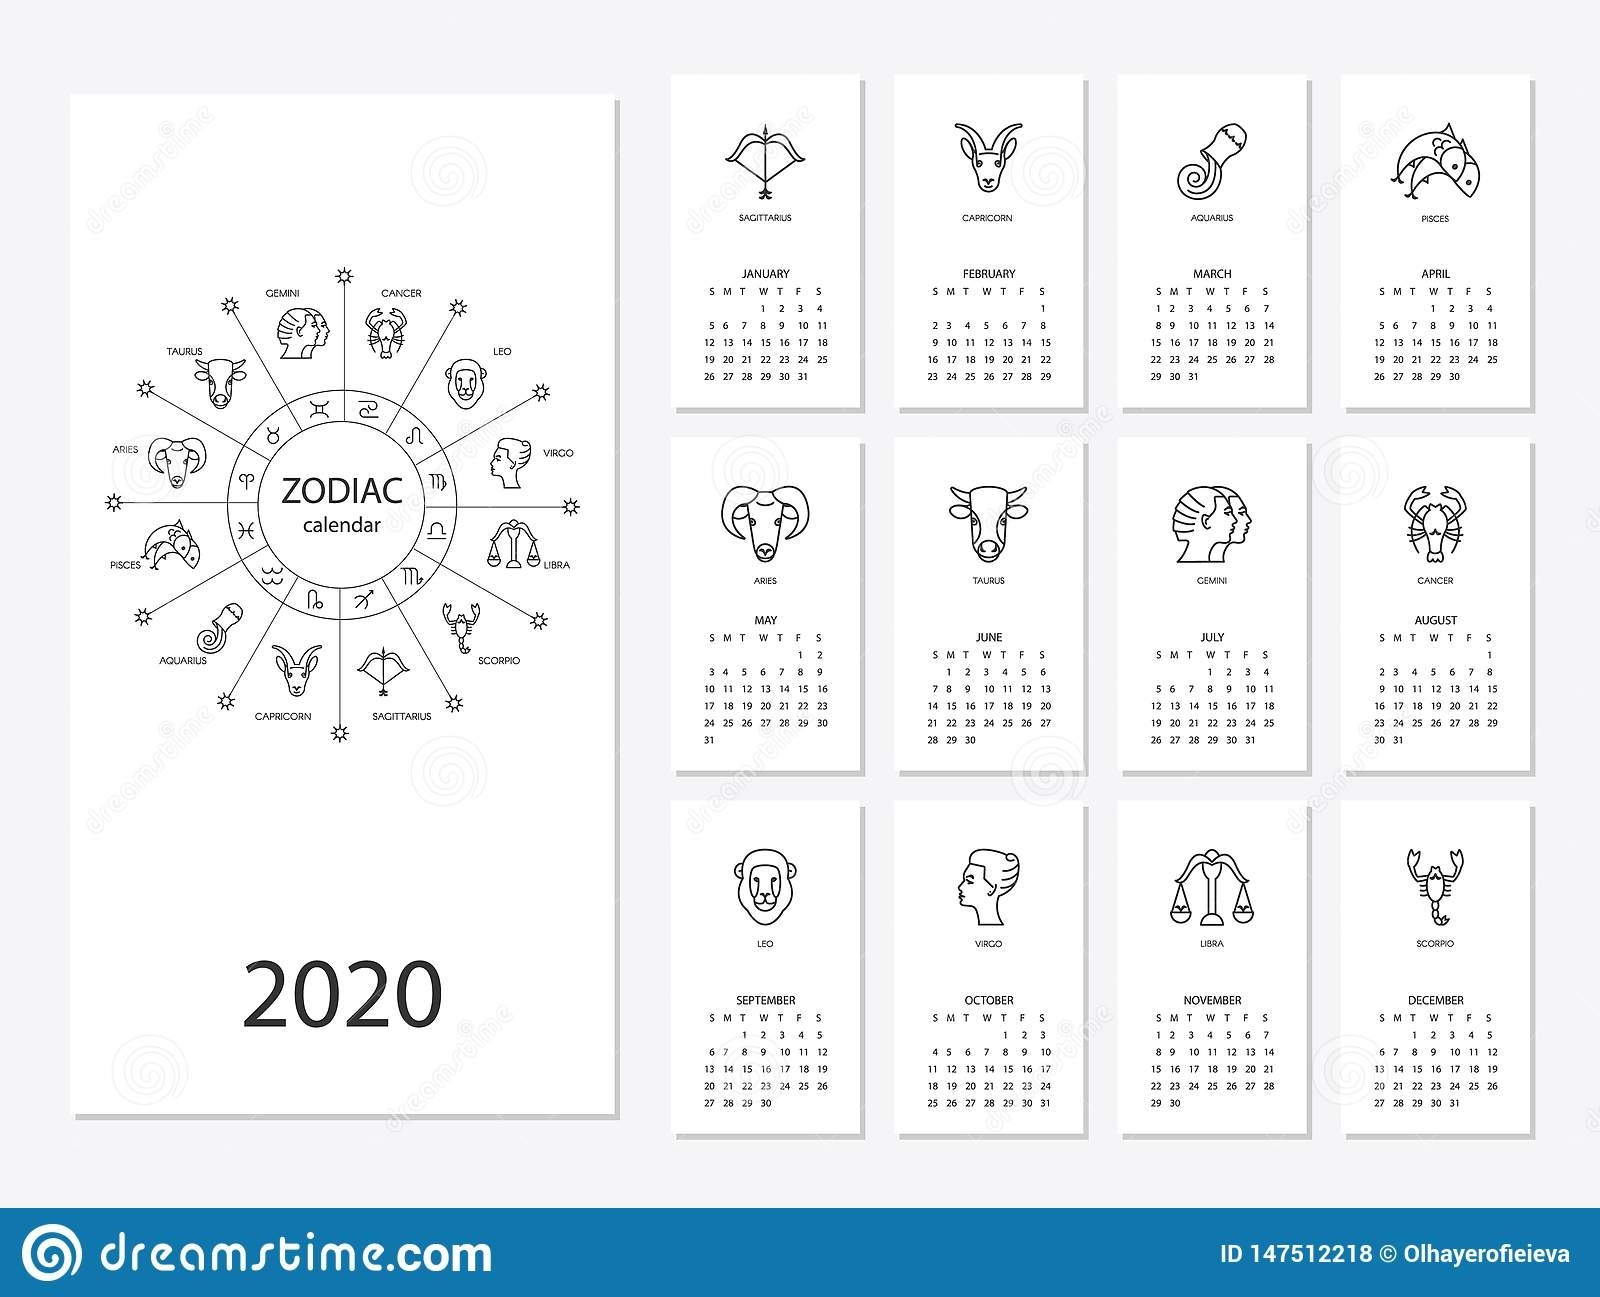 zodiac signs new dates 2020